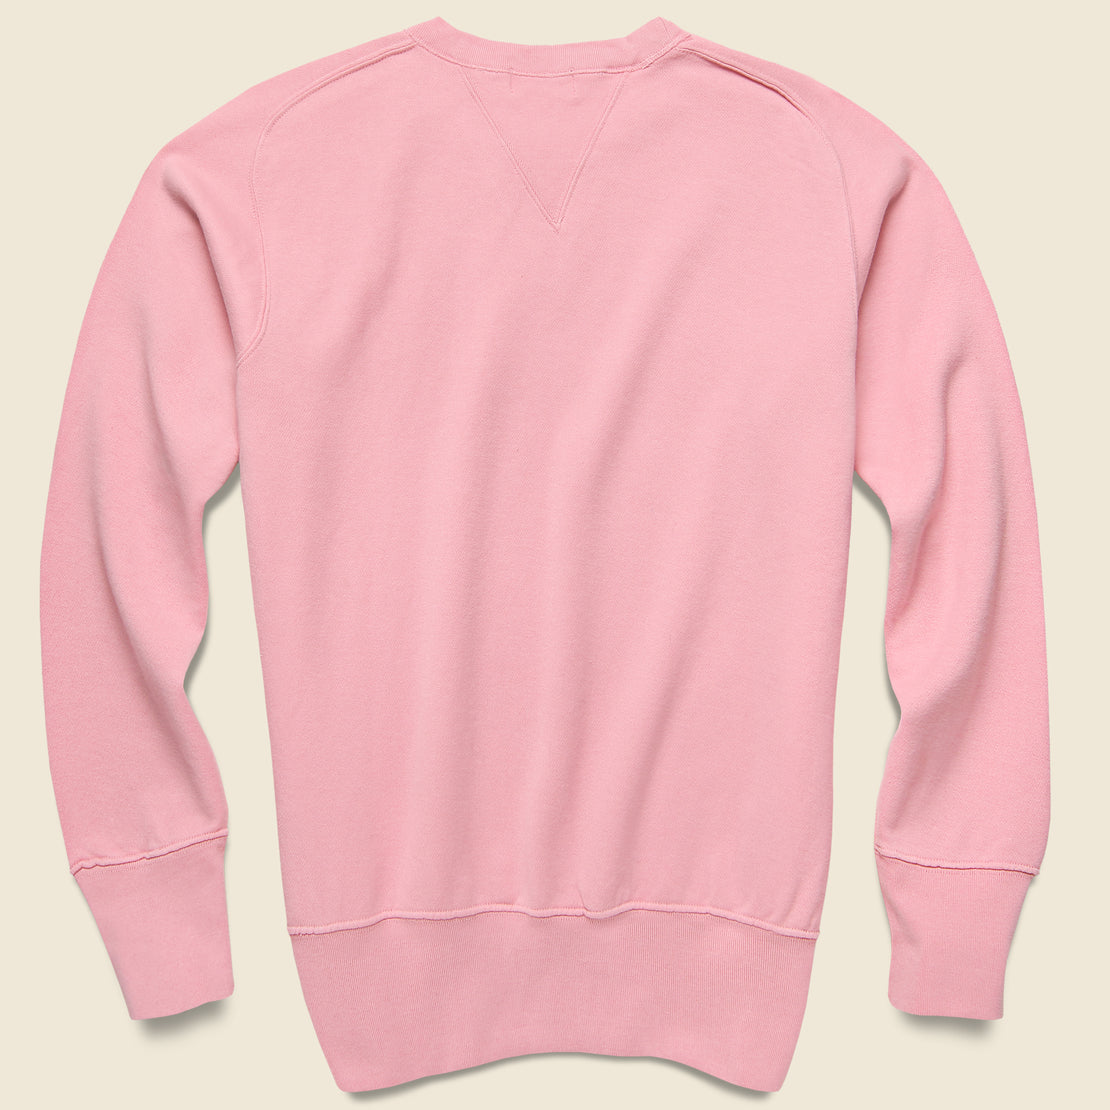 Bay Meadows Sweatshirt - Cotton Candy - Levis Vintage Clothing - STAG Provisions - Tops - Fleece / Sweatshirt